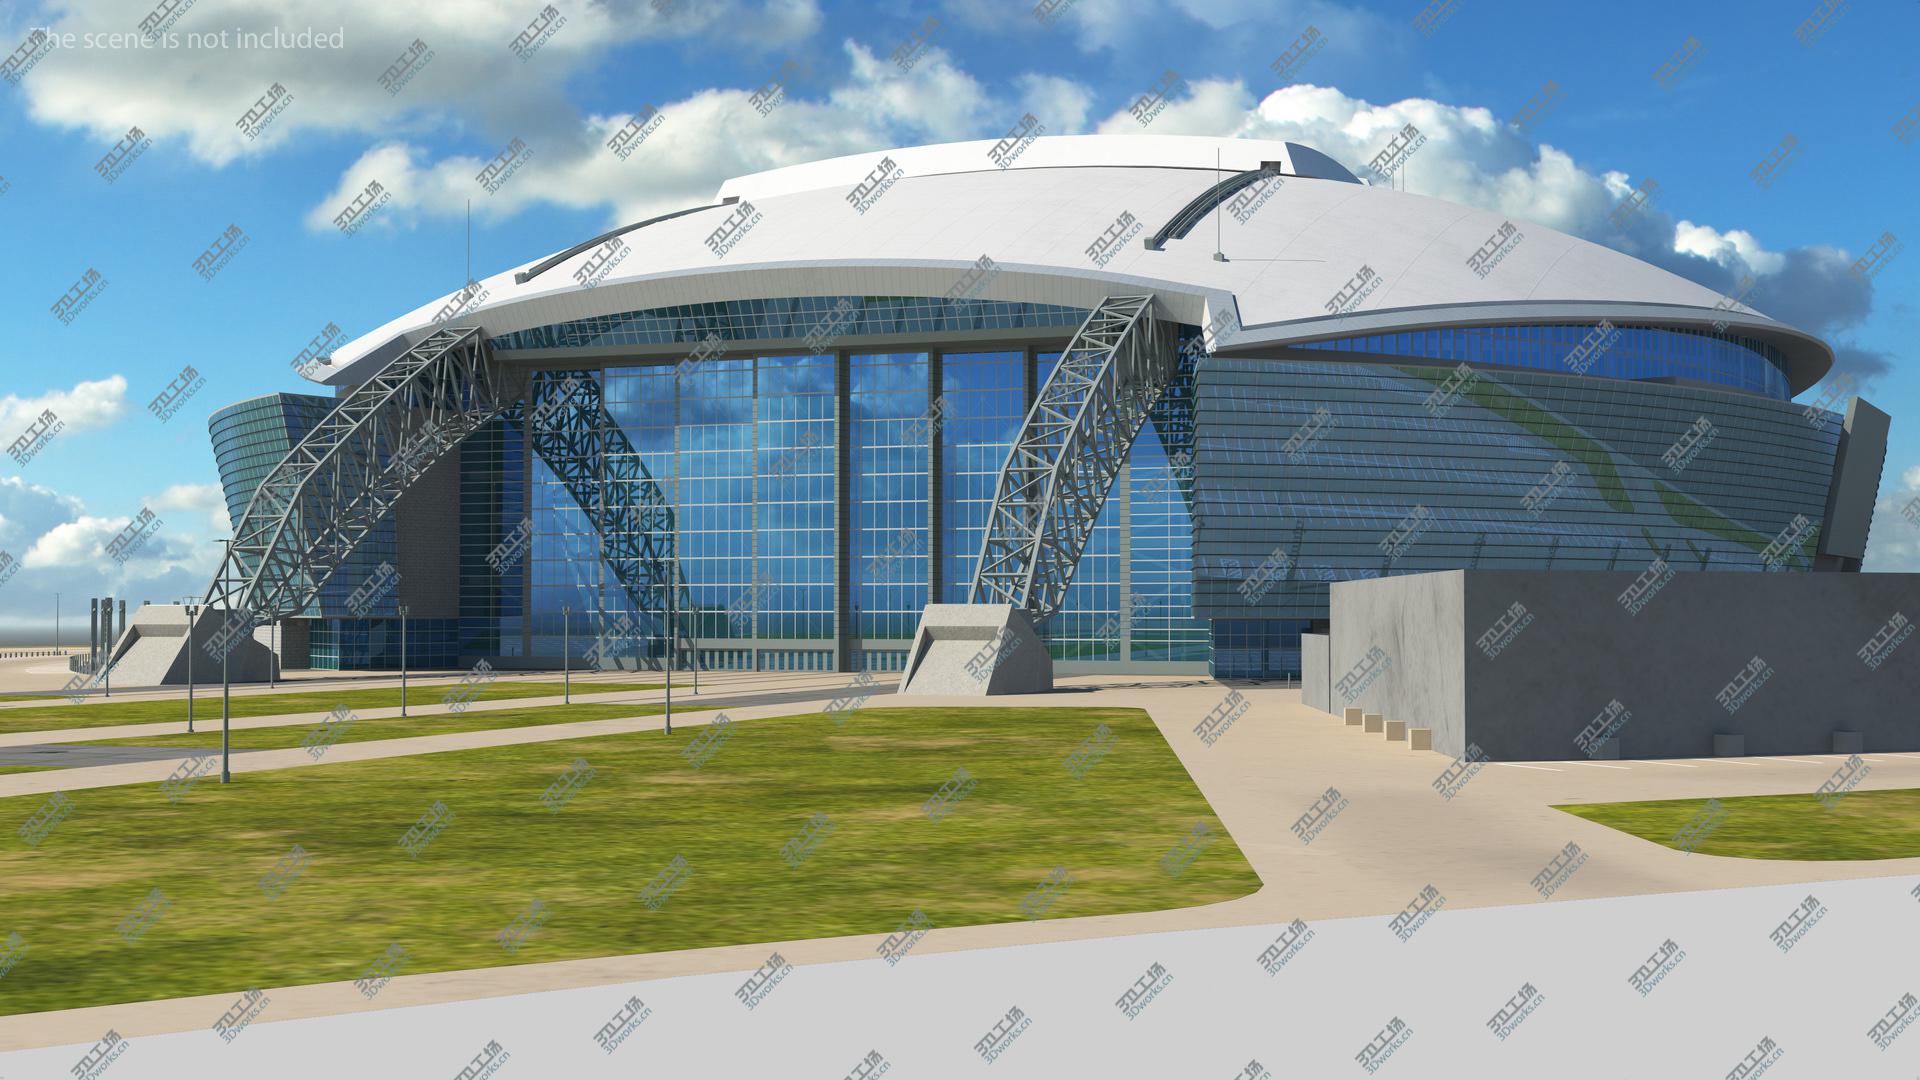 images/goods_img/20210319/3D Stadium Building/4.jpg